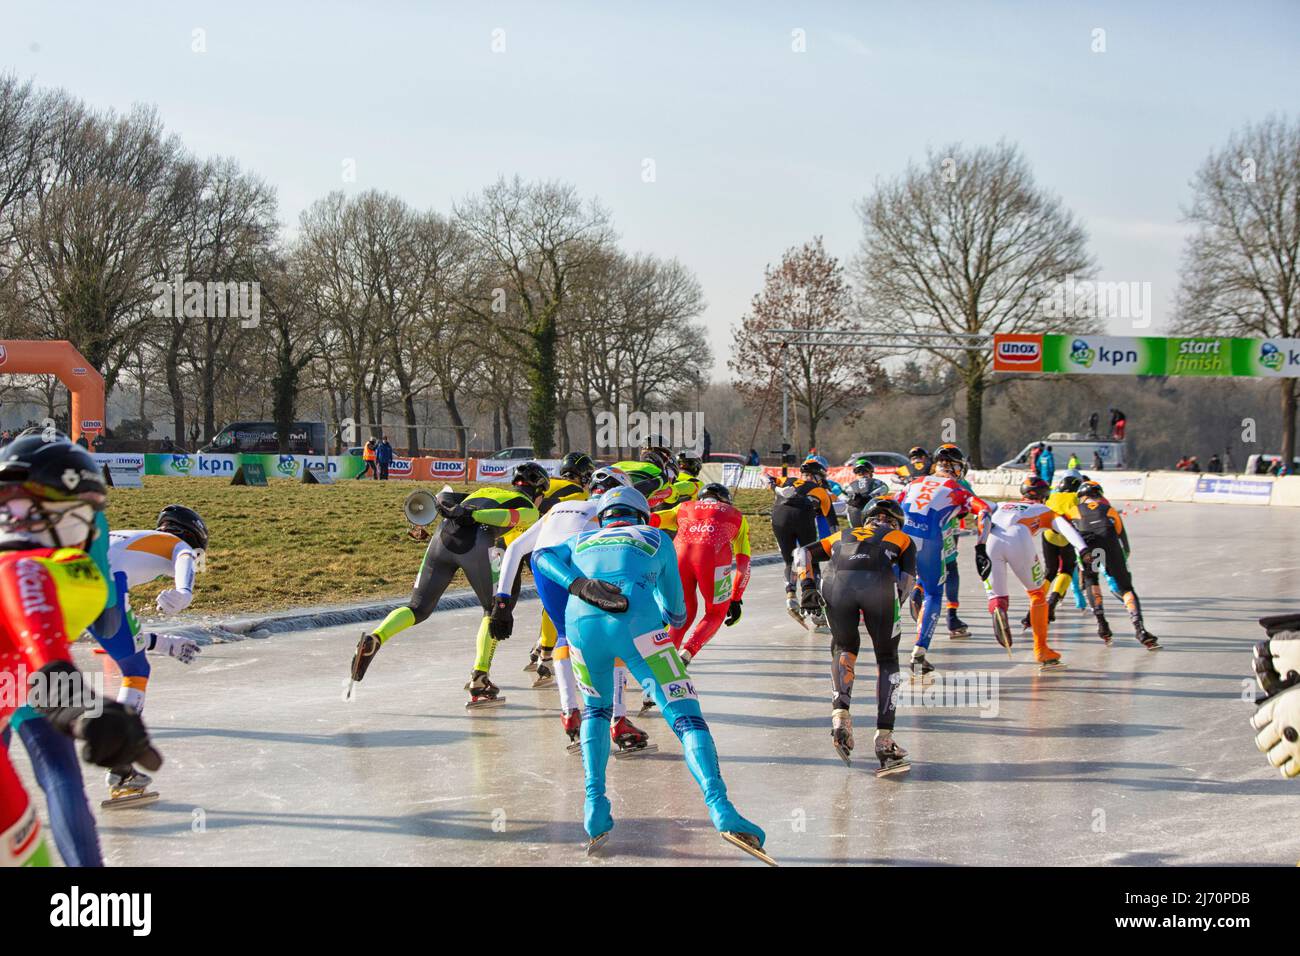 Marathon Ice speed skating on outdoor natural ice in Noordlaren in Drenthe, The Netherlands Stock Photo